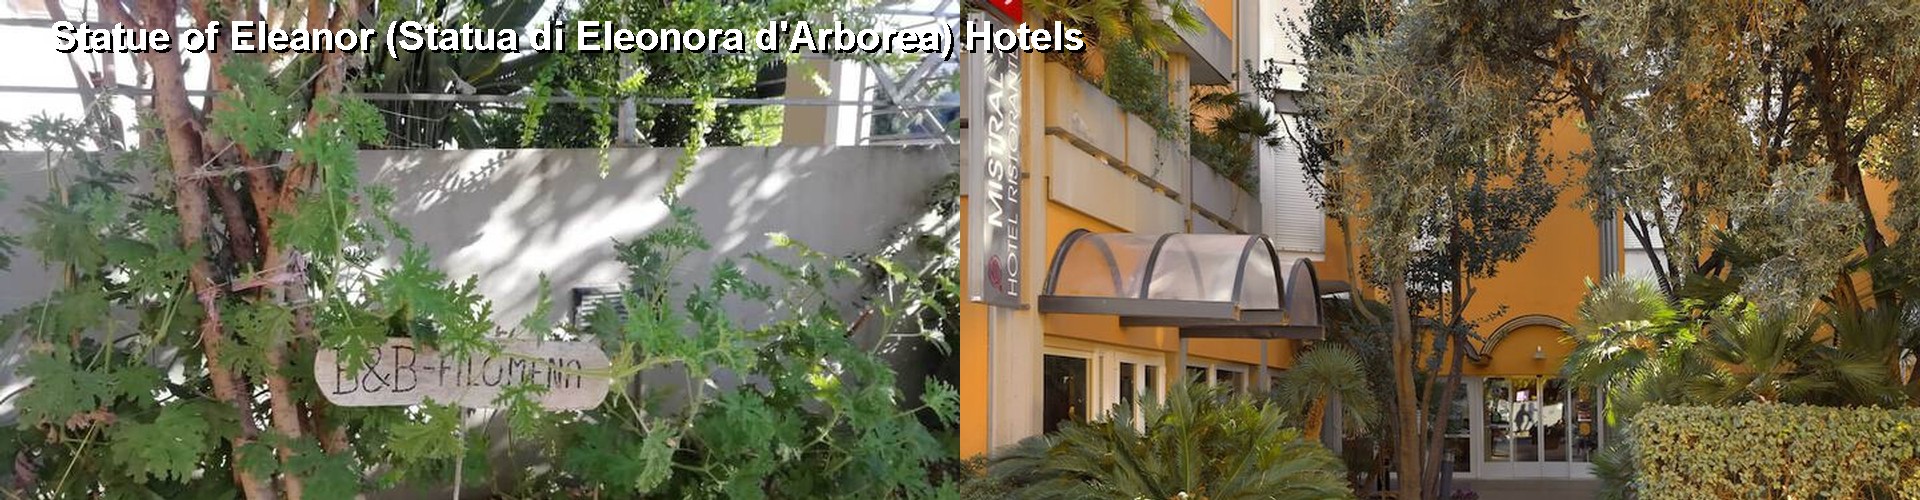 3 Best Hotels near Statue of Eleanor (Statua di Eleonora d'Arborea)